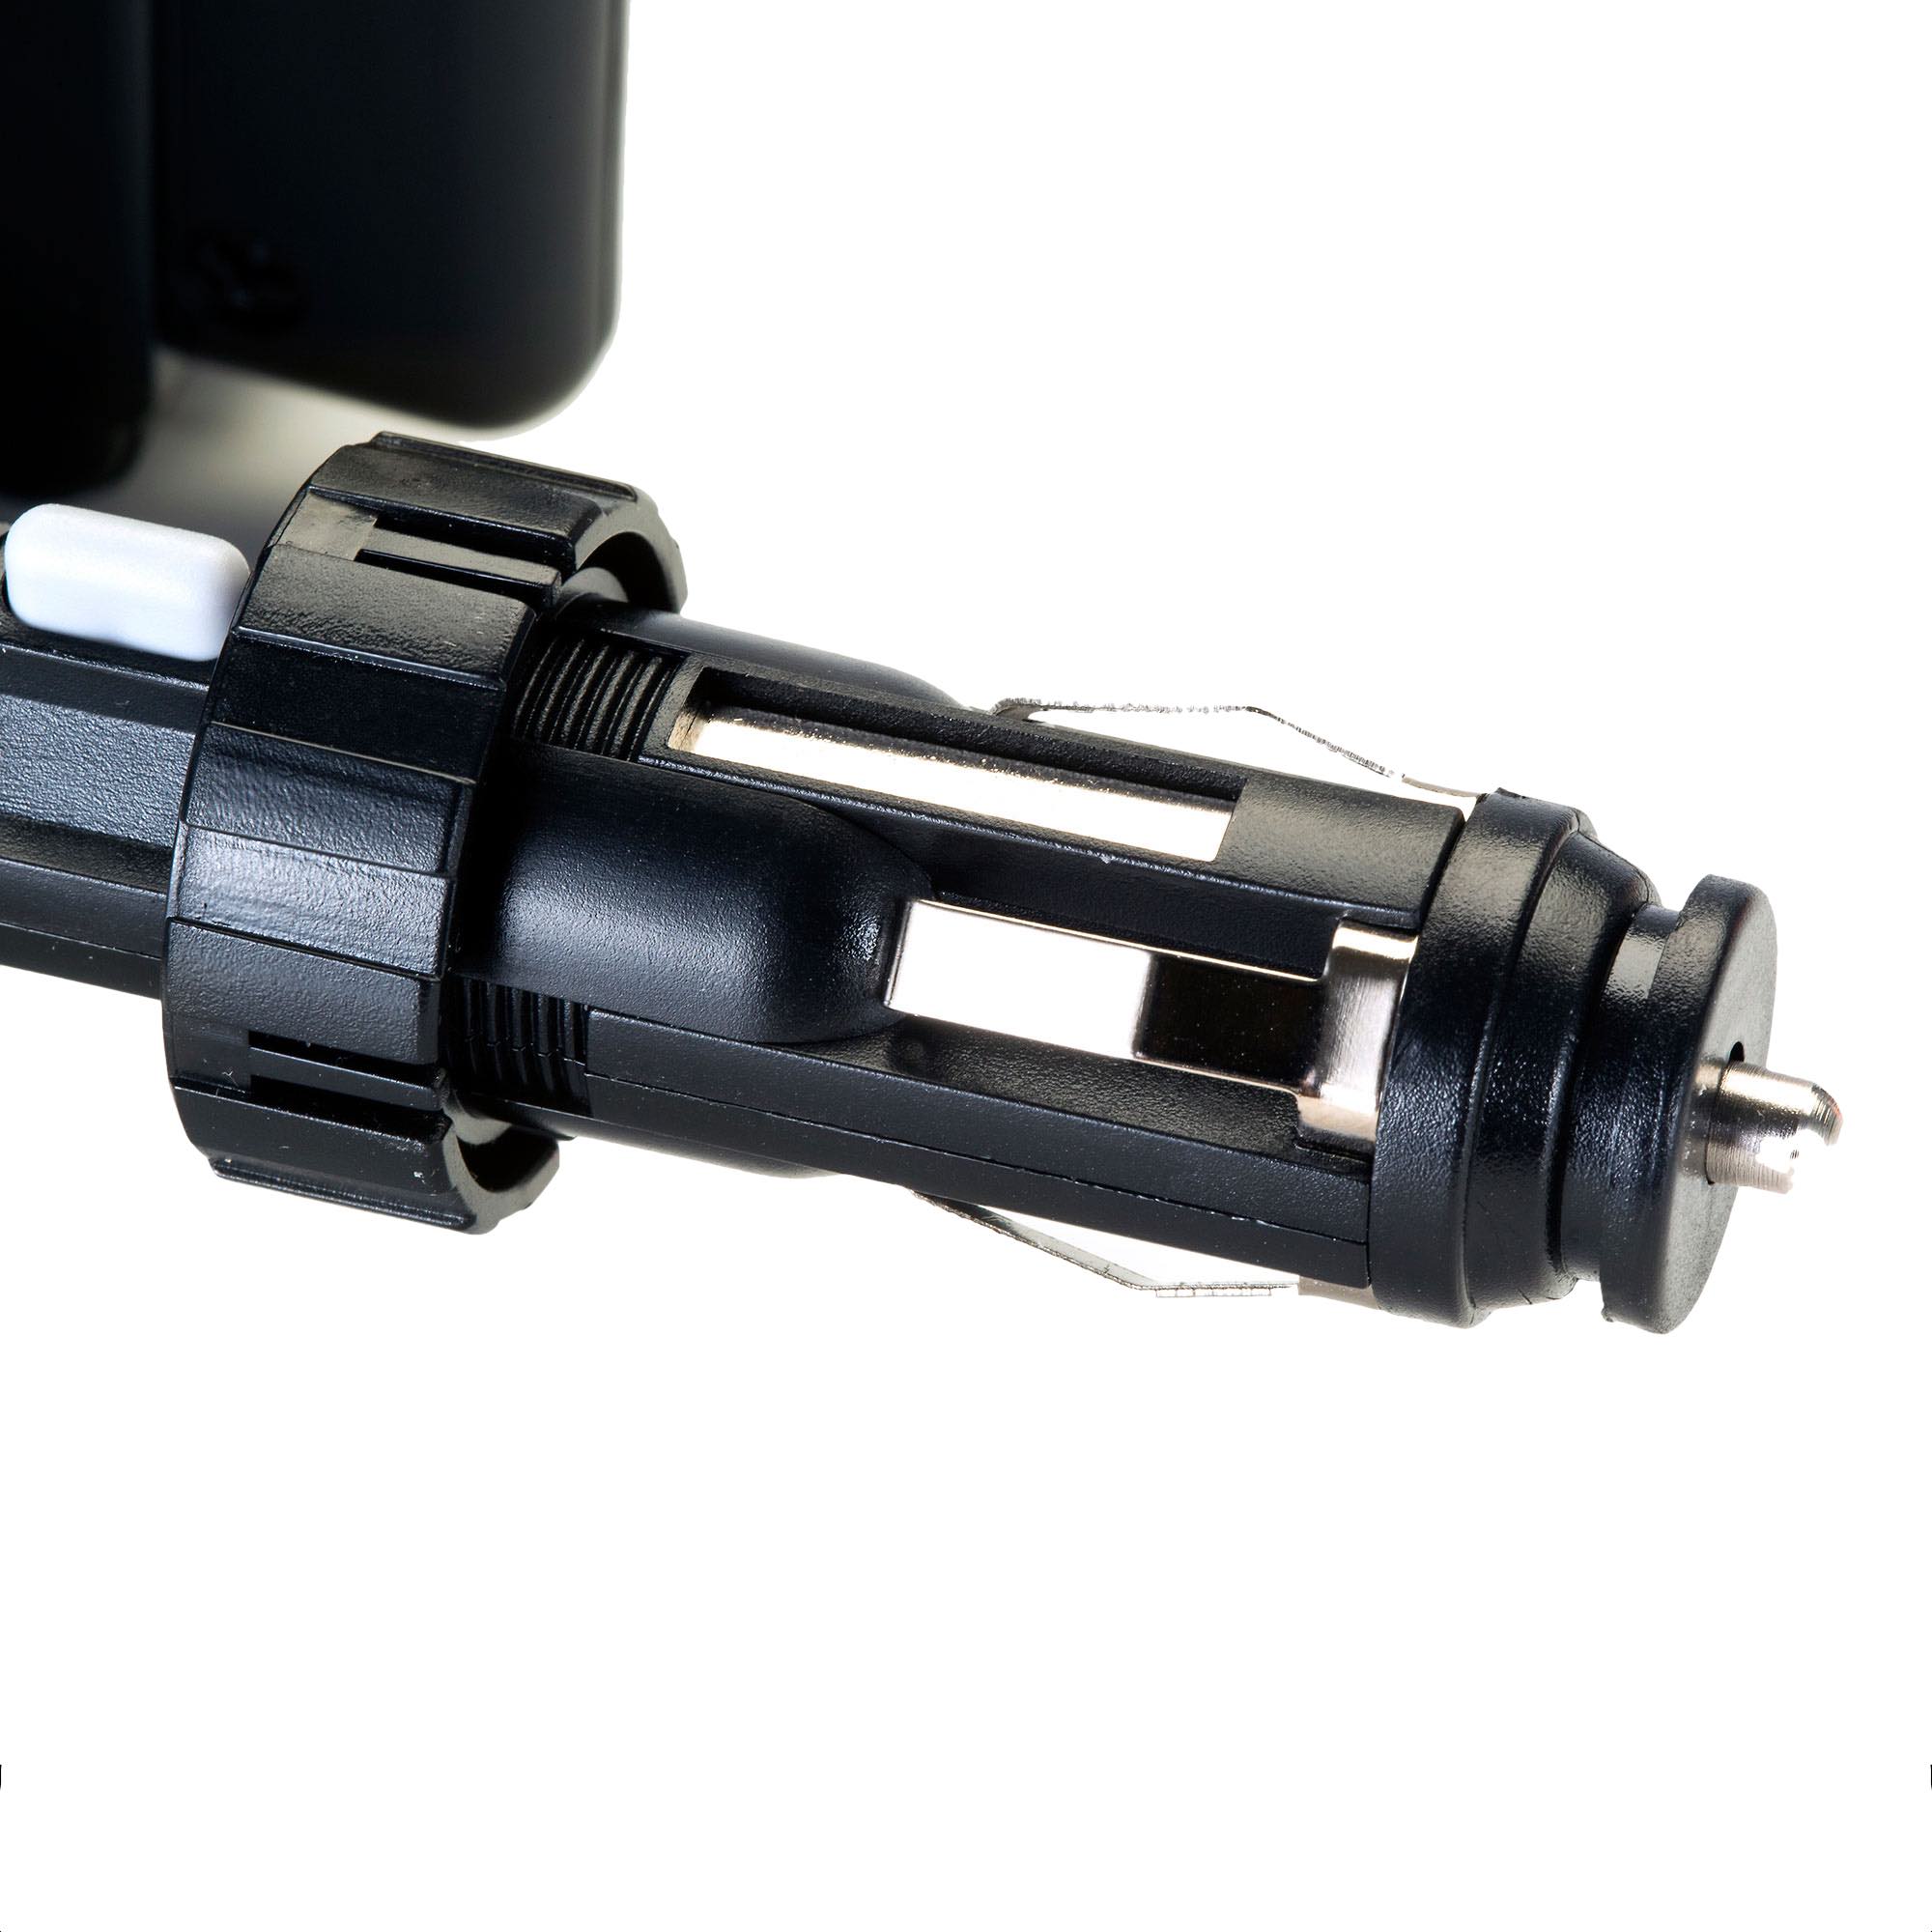 Dual USB / 12V Charger Car Cigarette Lighter Mount and Holder for the LG Plum